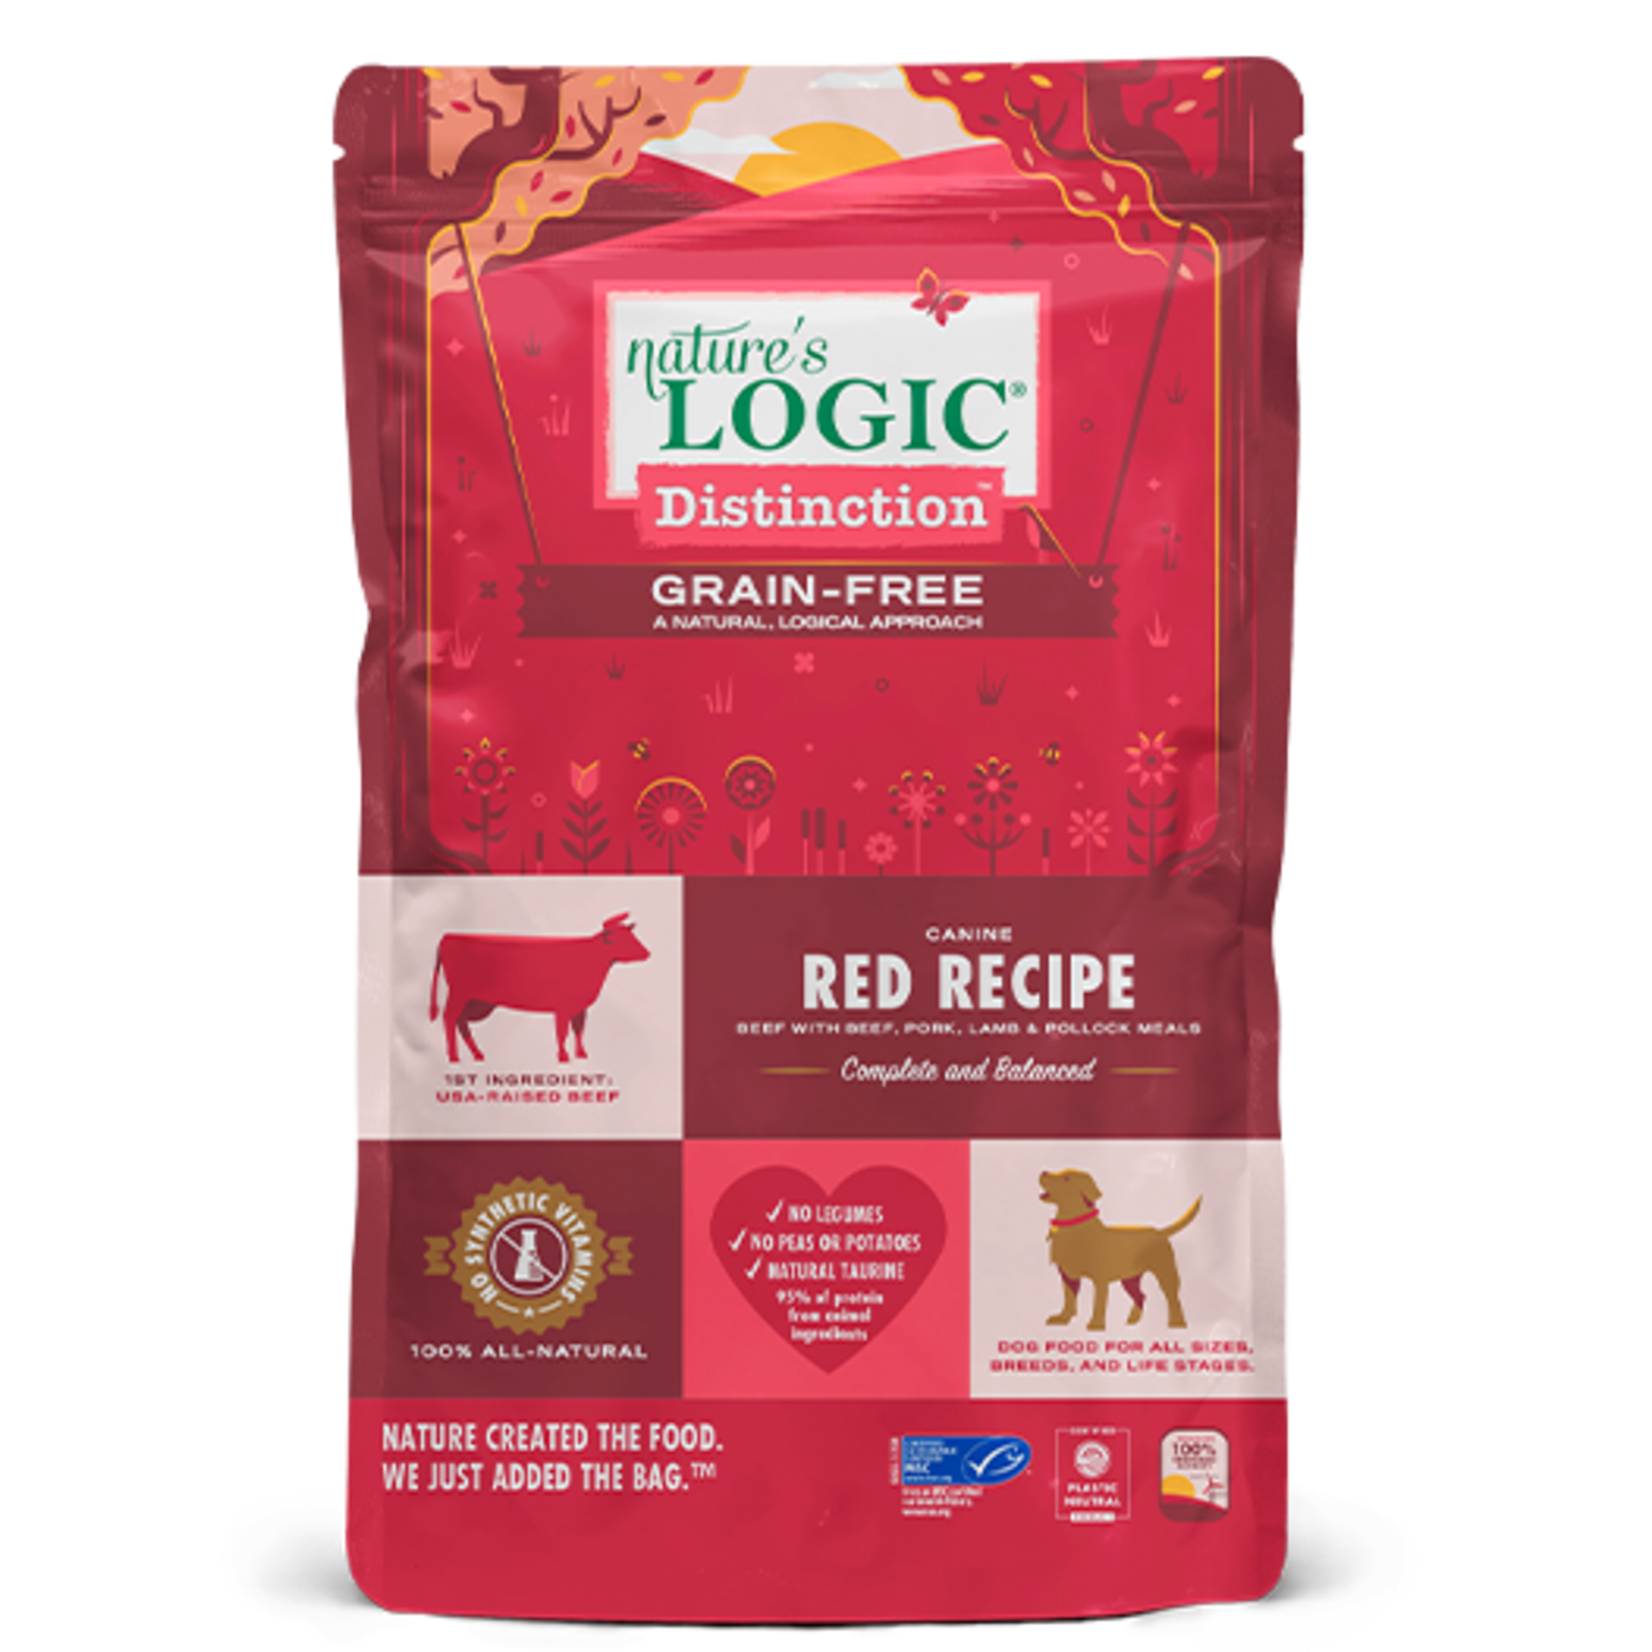 Nature's Logic Nature's Logic Distinction - Grain-Free Canine Red Recipe